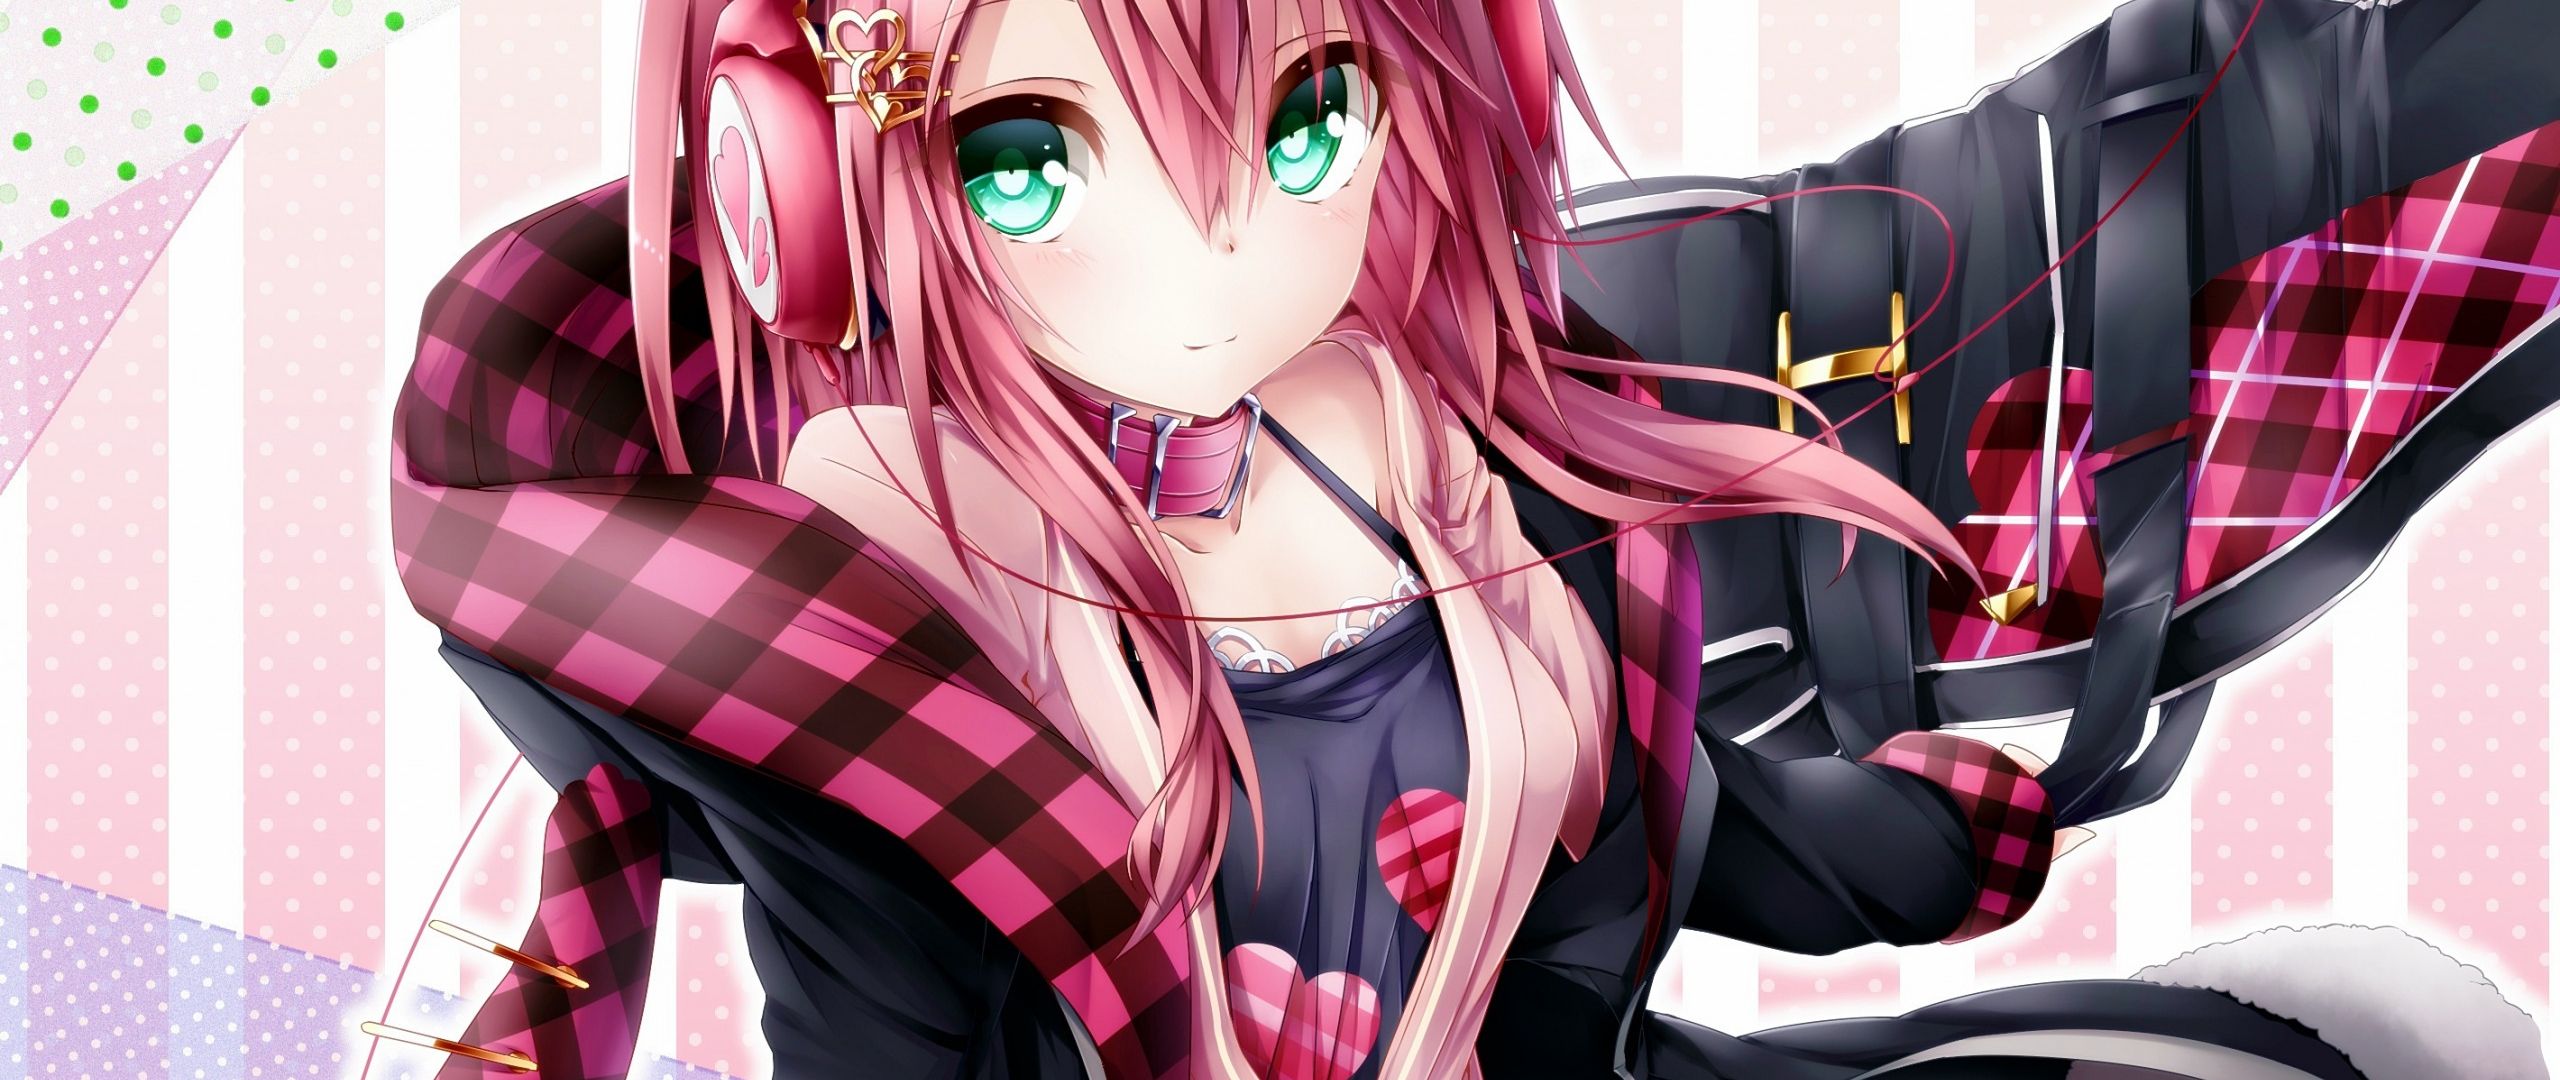 Desktop Wallpaper Green Eyes, Cute, Anime Girl, Pink Hair, Original, HD Image, Picture, Background, 8c4caa